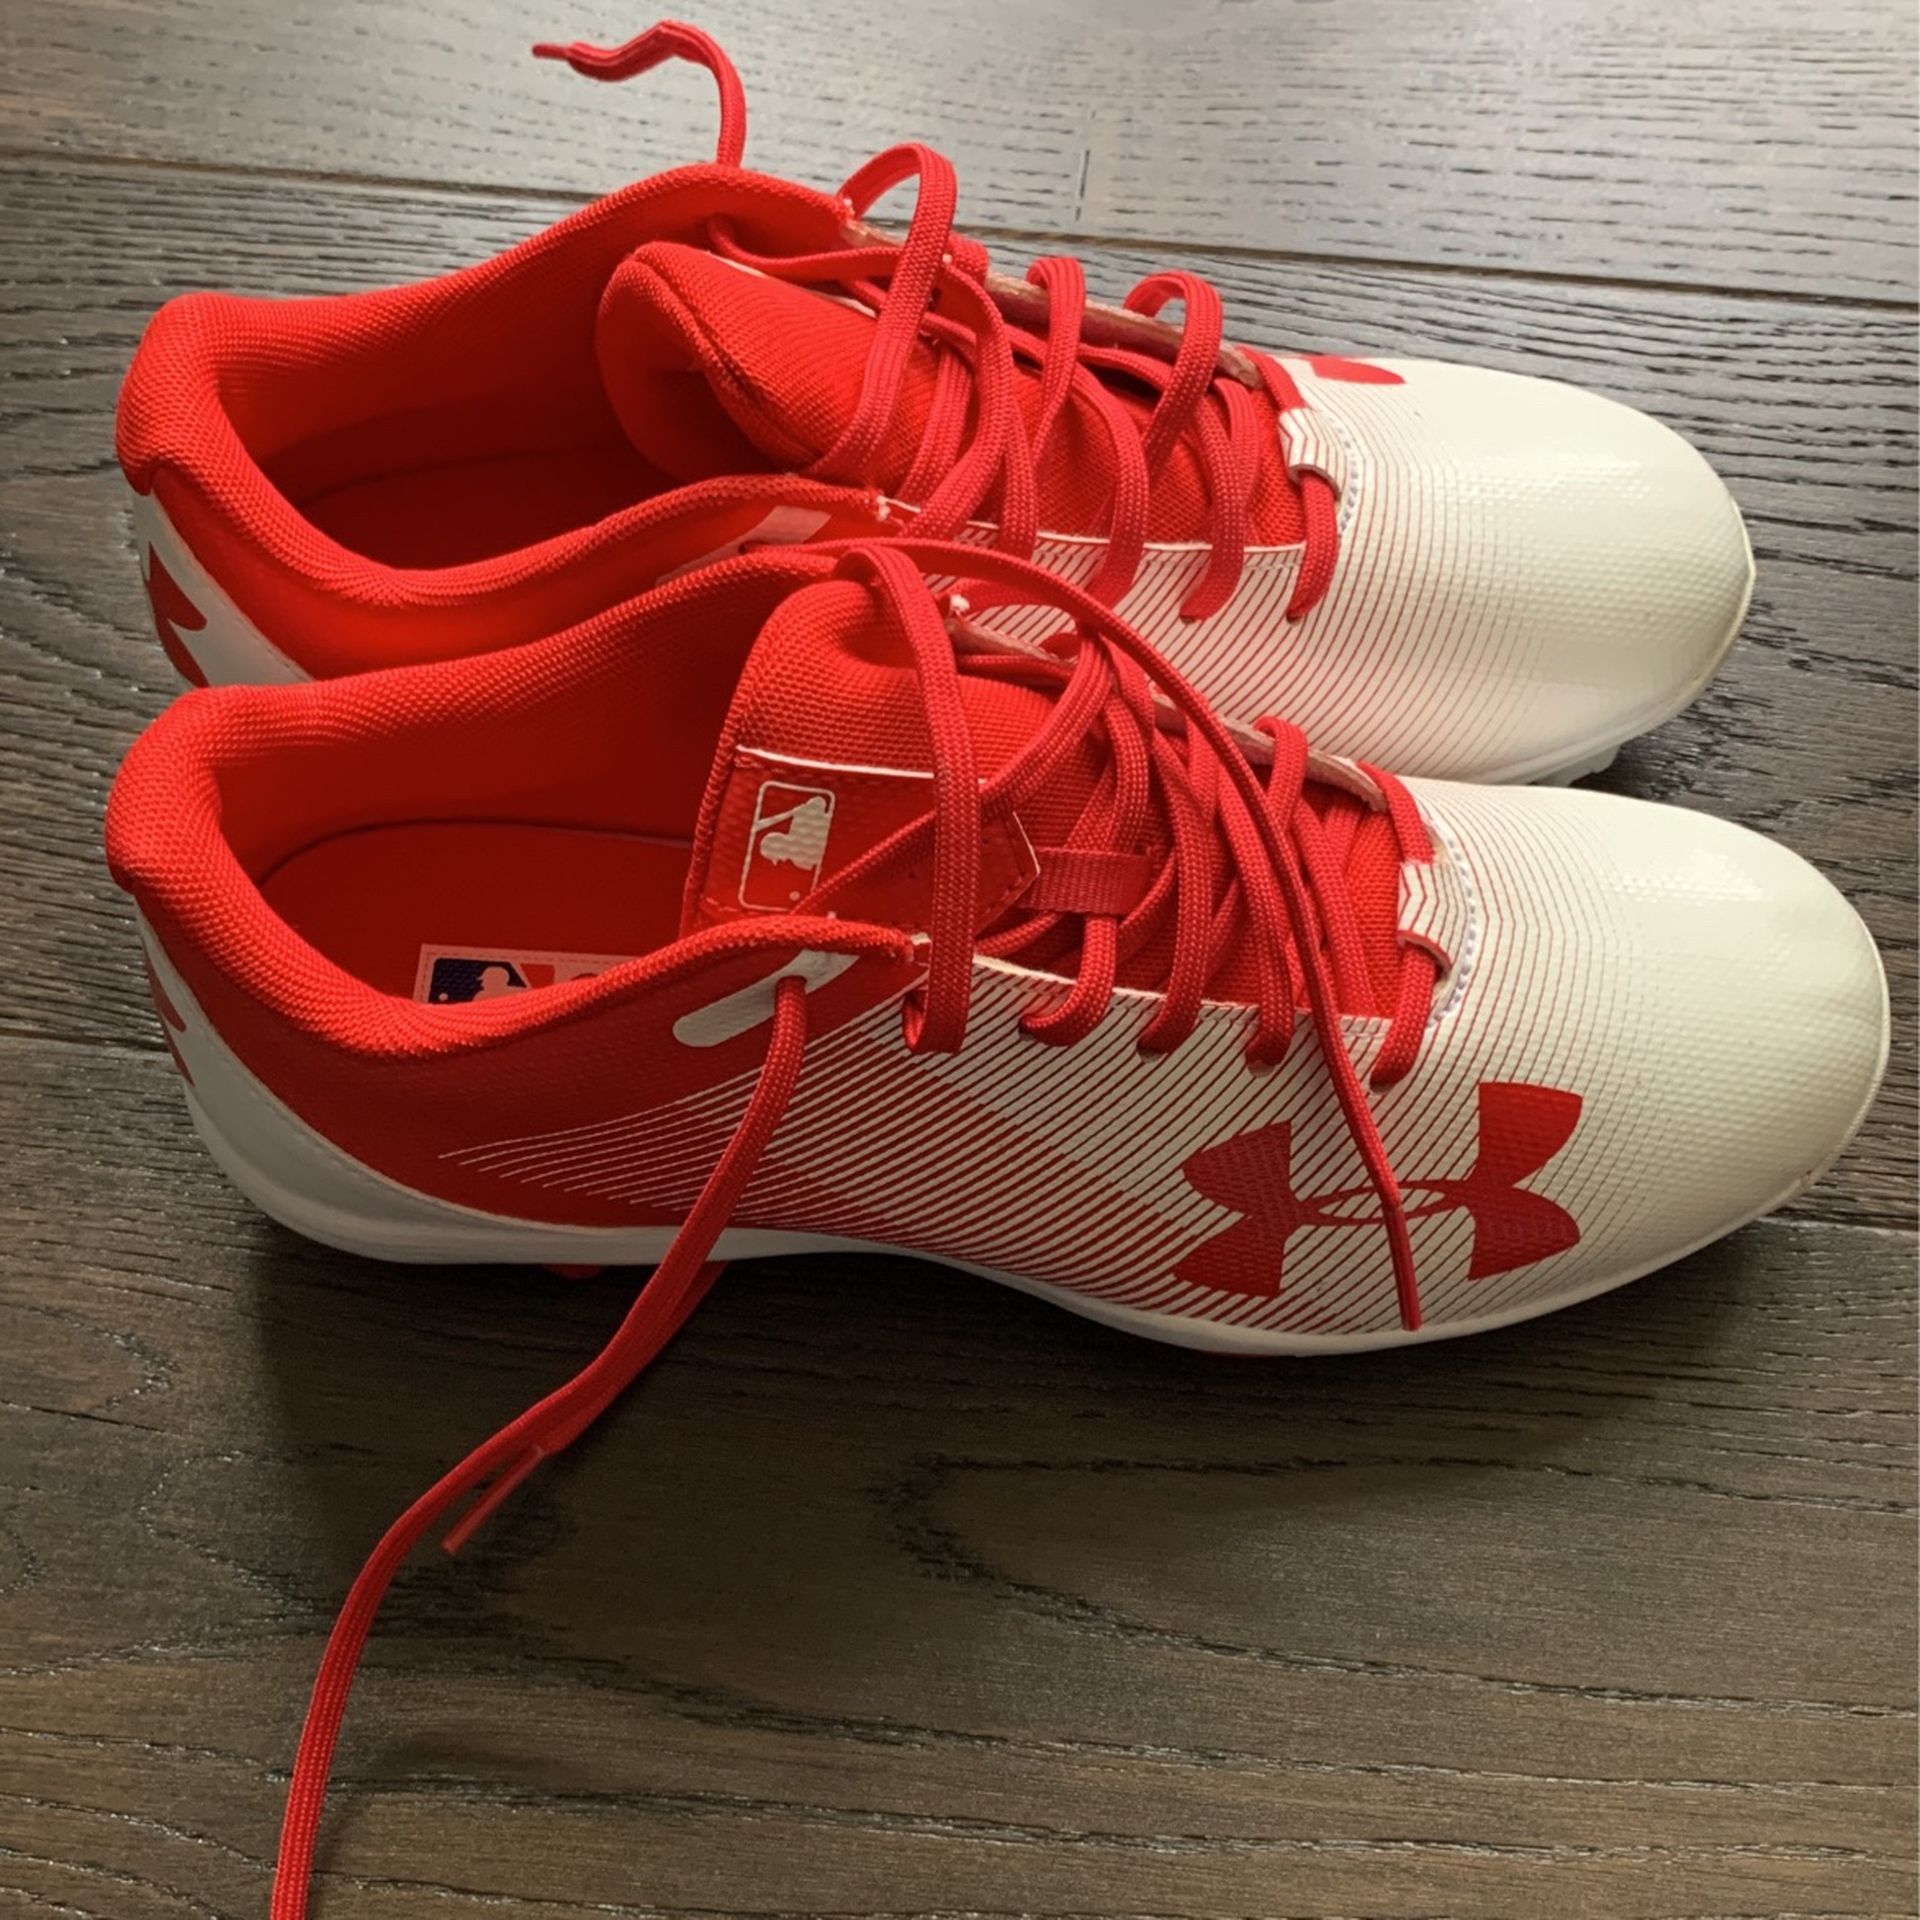 Brand new Size 5.5 Boys Baseball Shoe